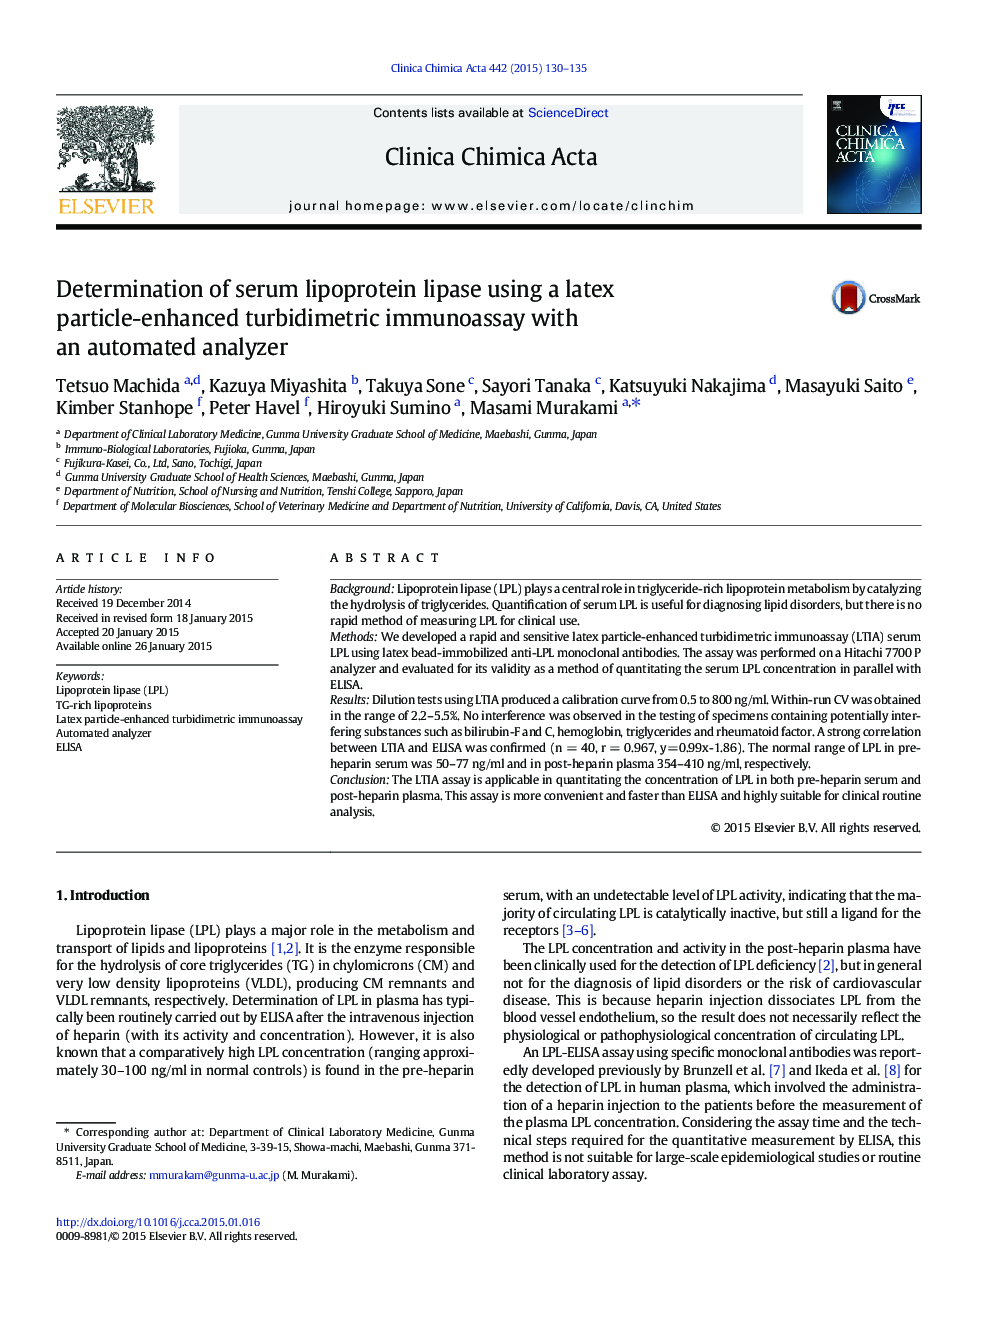 Determination of serum lipoprotein lipase using a latex particle-enhanced turbidimetric immunoassay with an automated analyzer